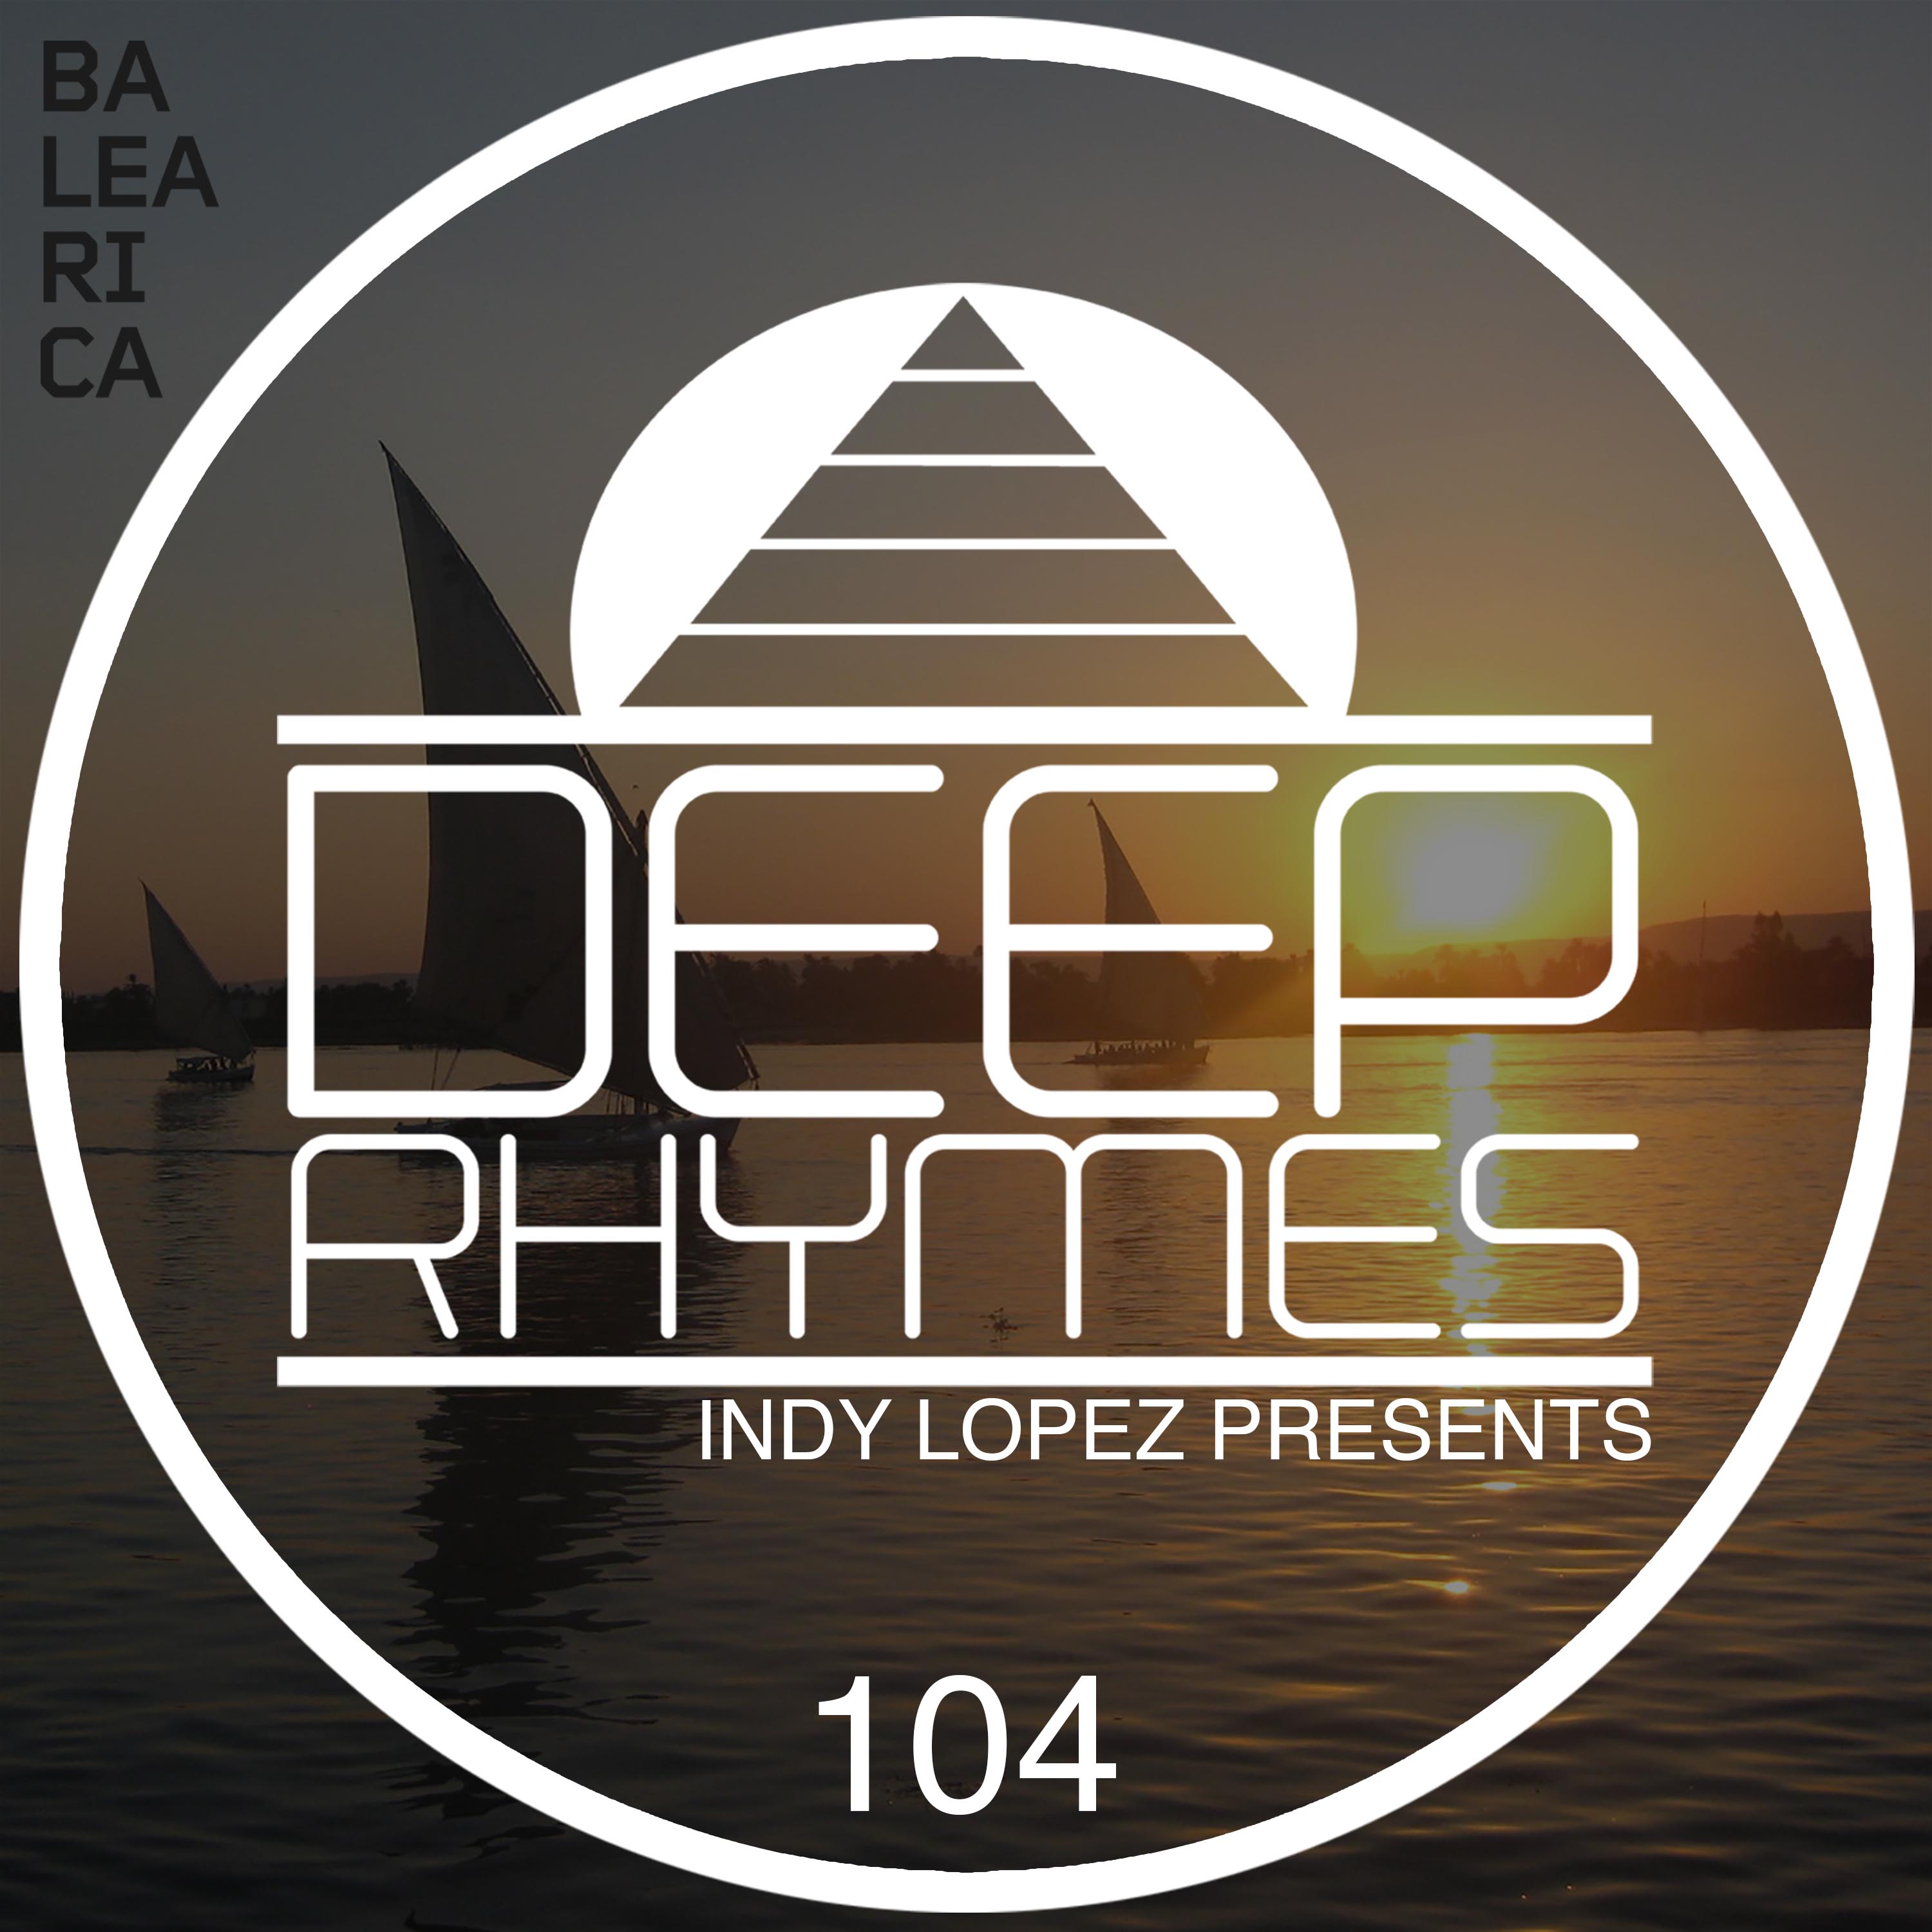 Deep Rhymes Music at Balearica 104